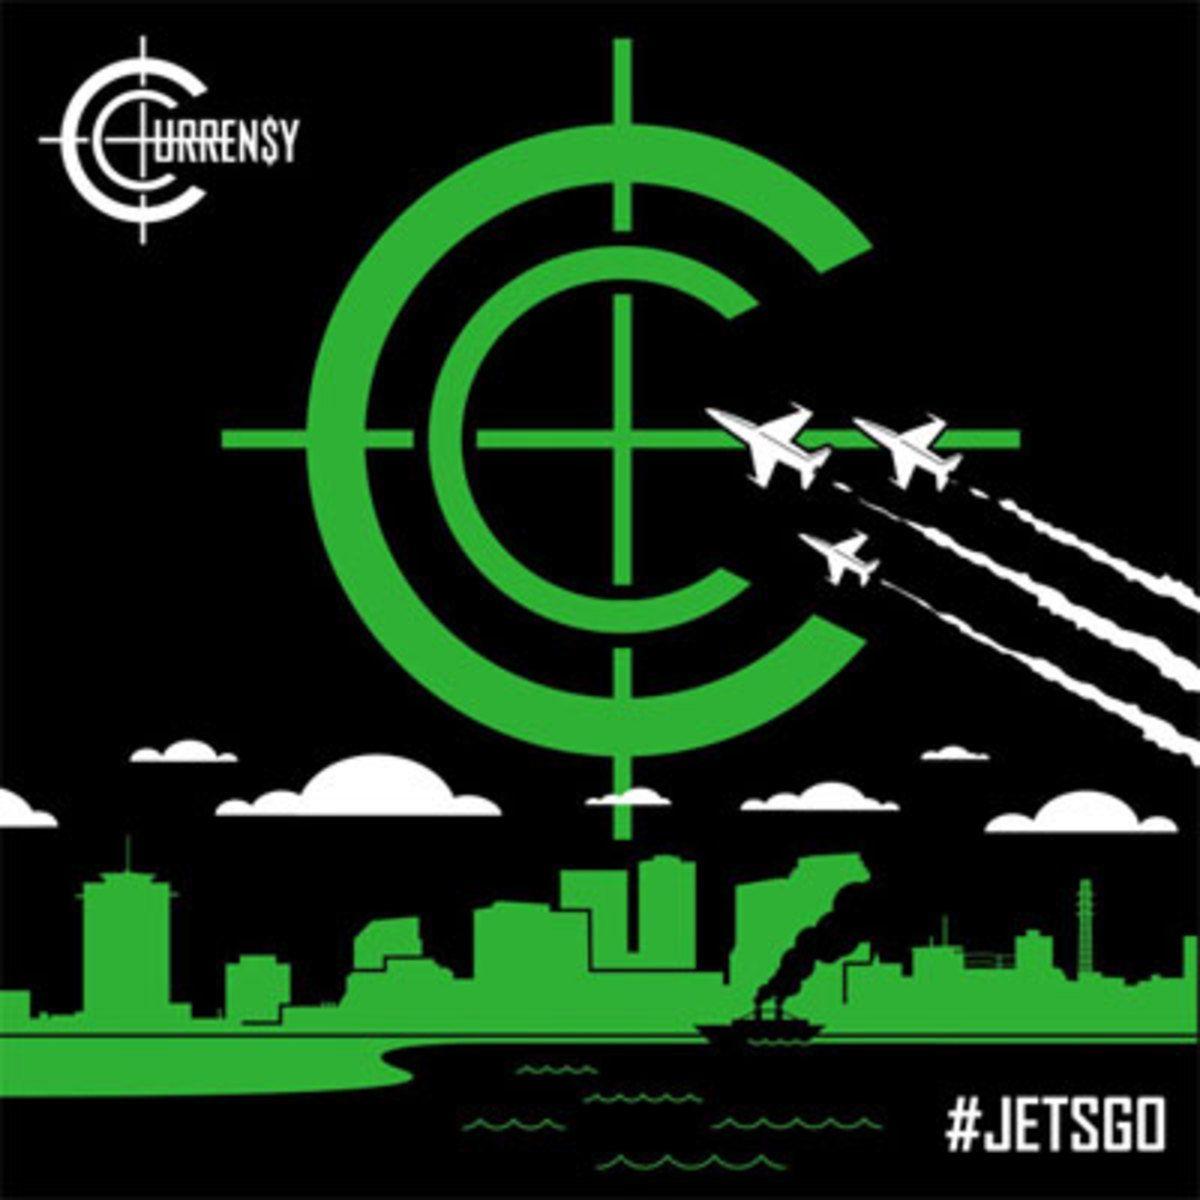 Curren$y Logo - Curren$y - #JetsGo - DJBooth